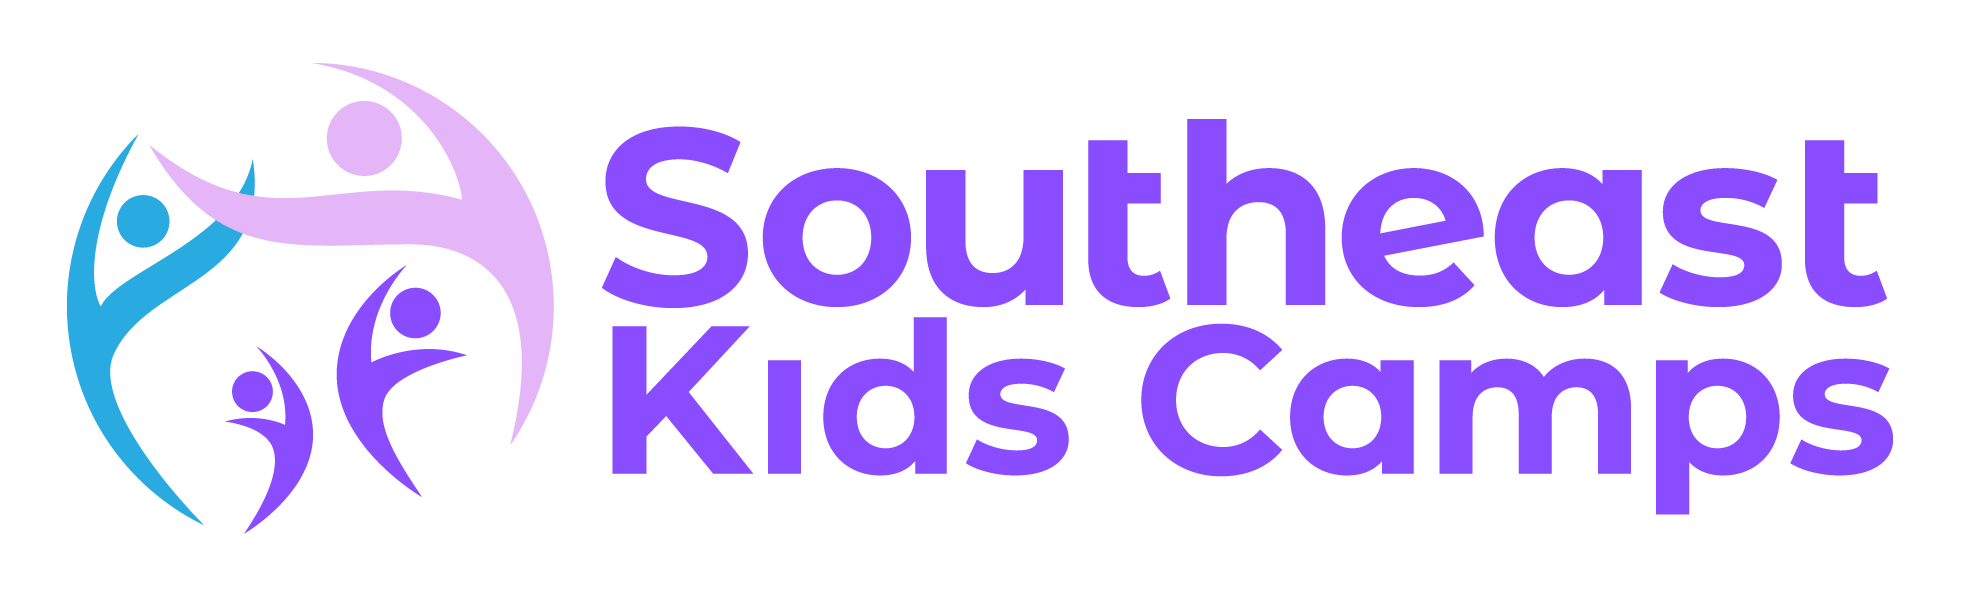 Southeast Kids Camps